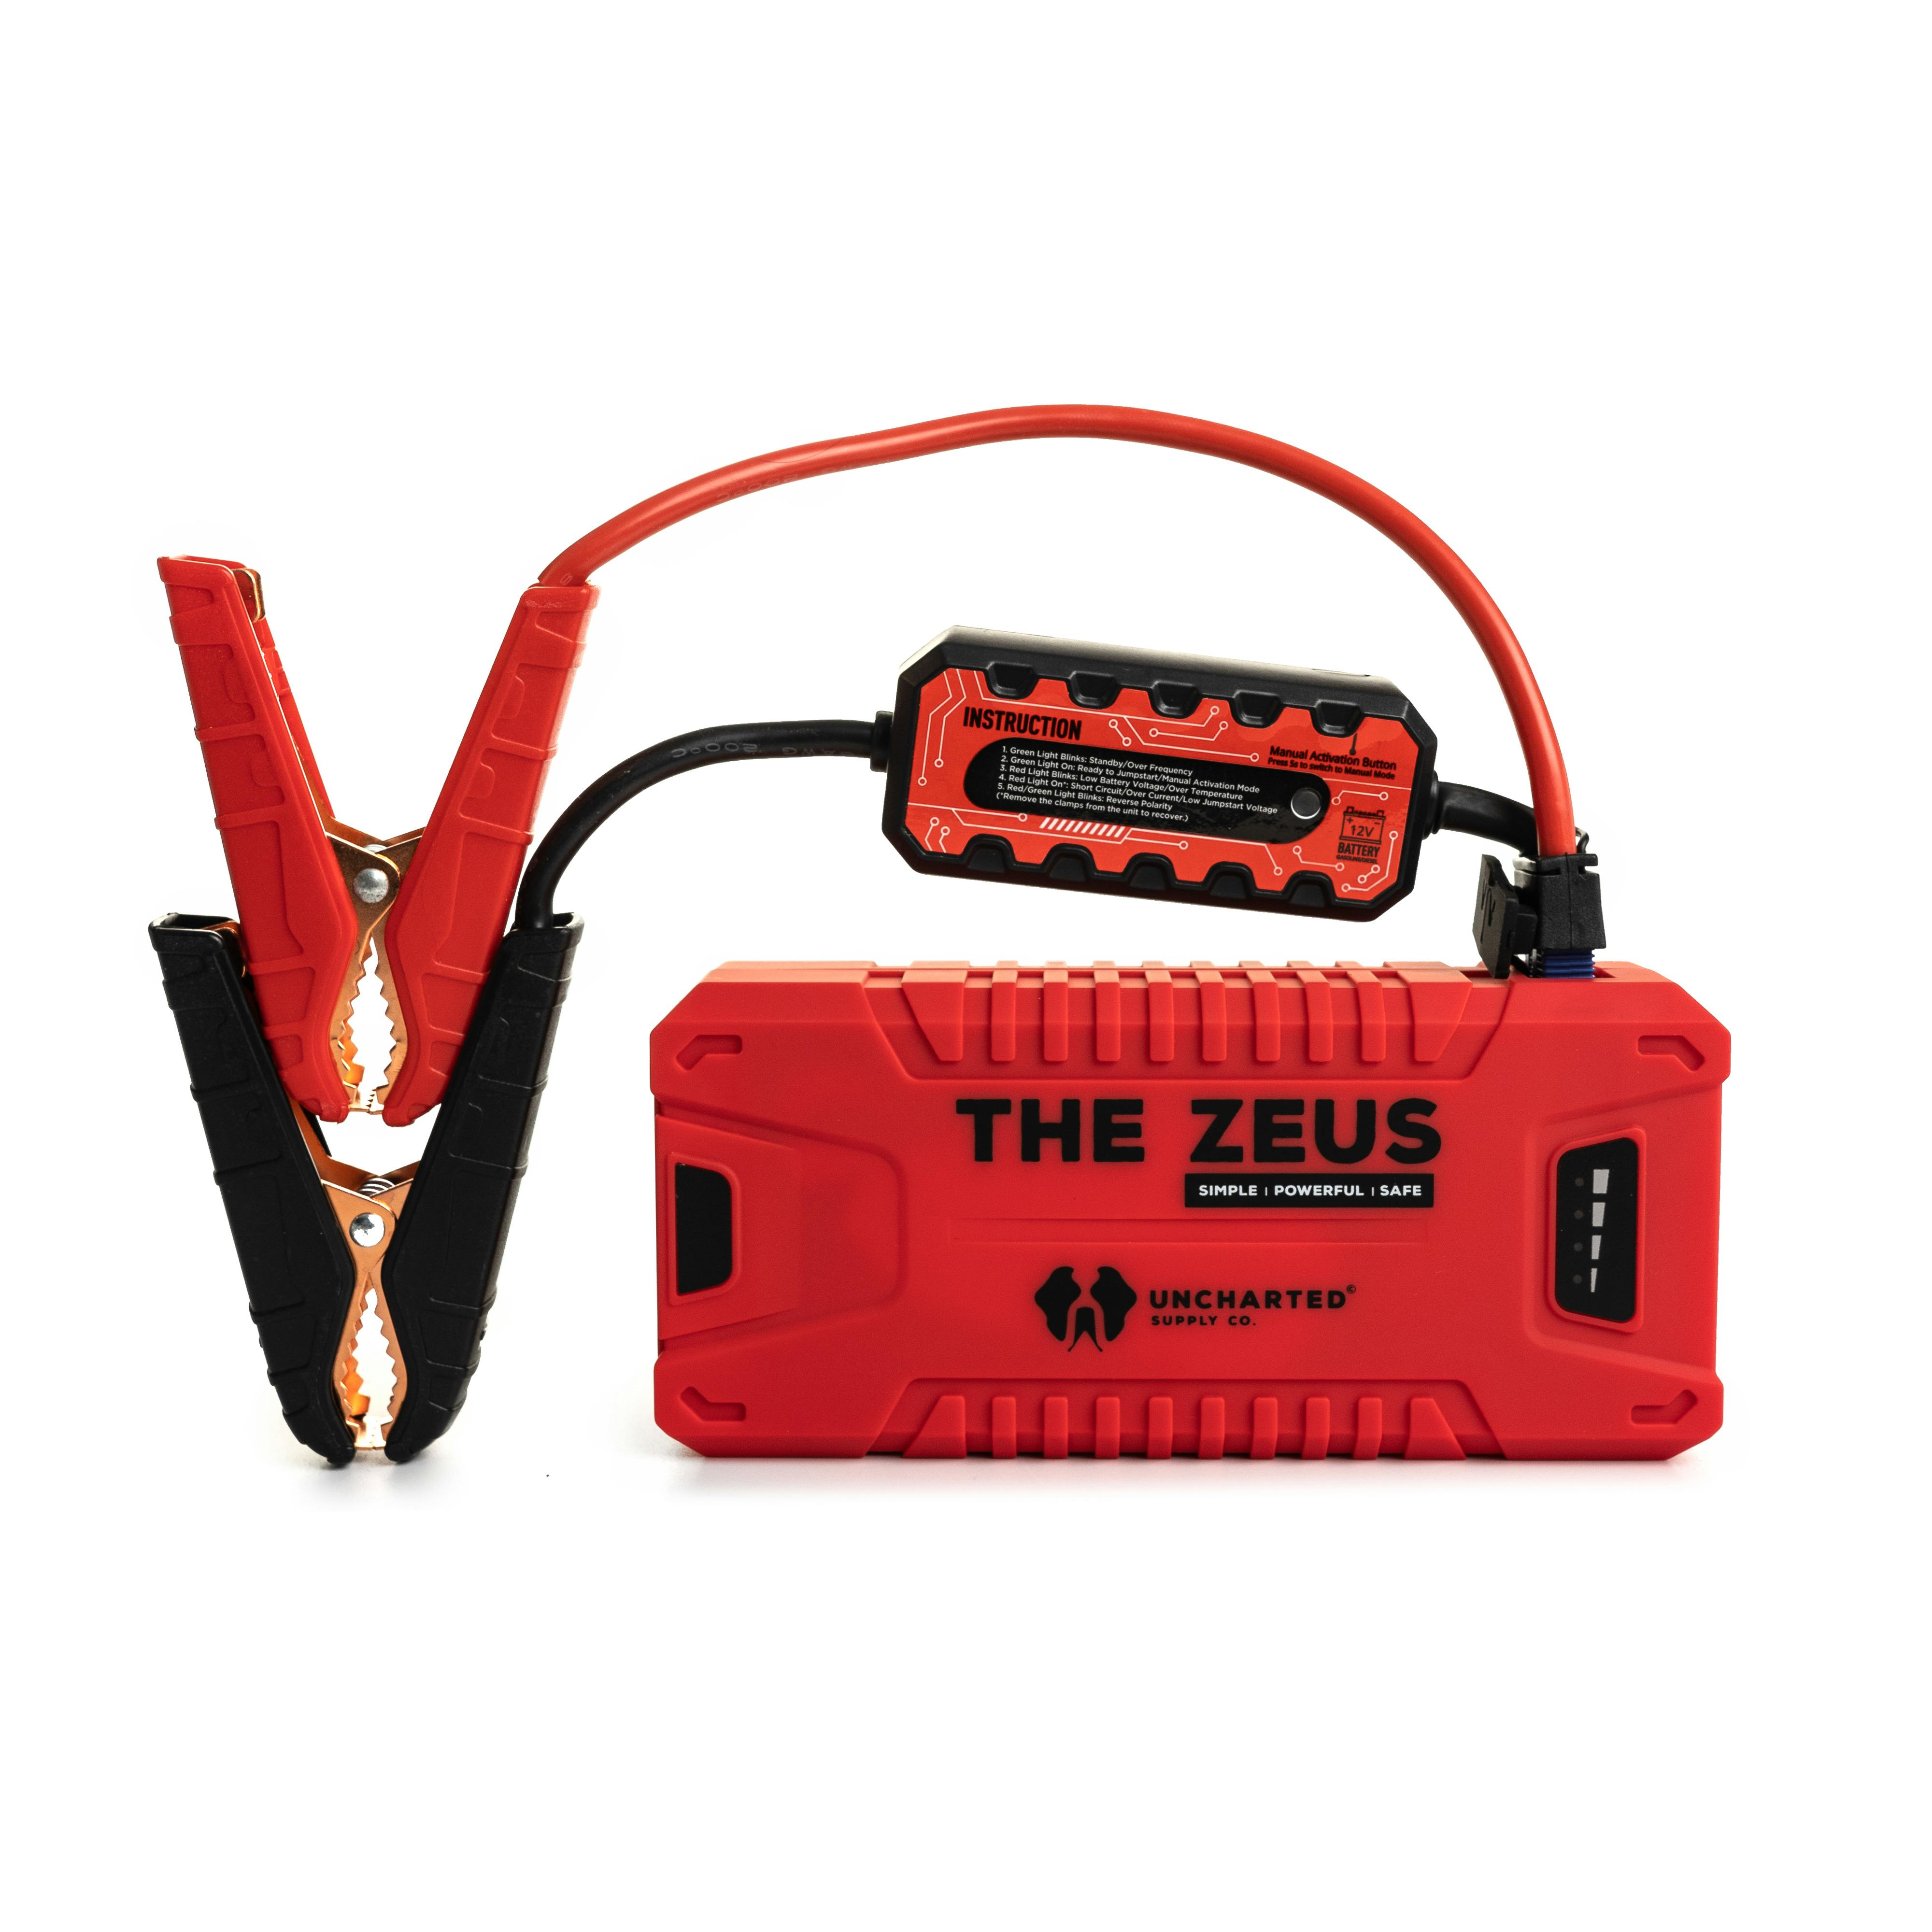 Uncharted Supply Co. The Zeus - Power Bank + Car Battery Jump Starter - Red  | Gear | Huckberry